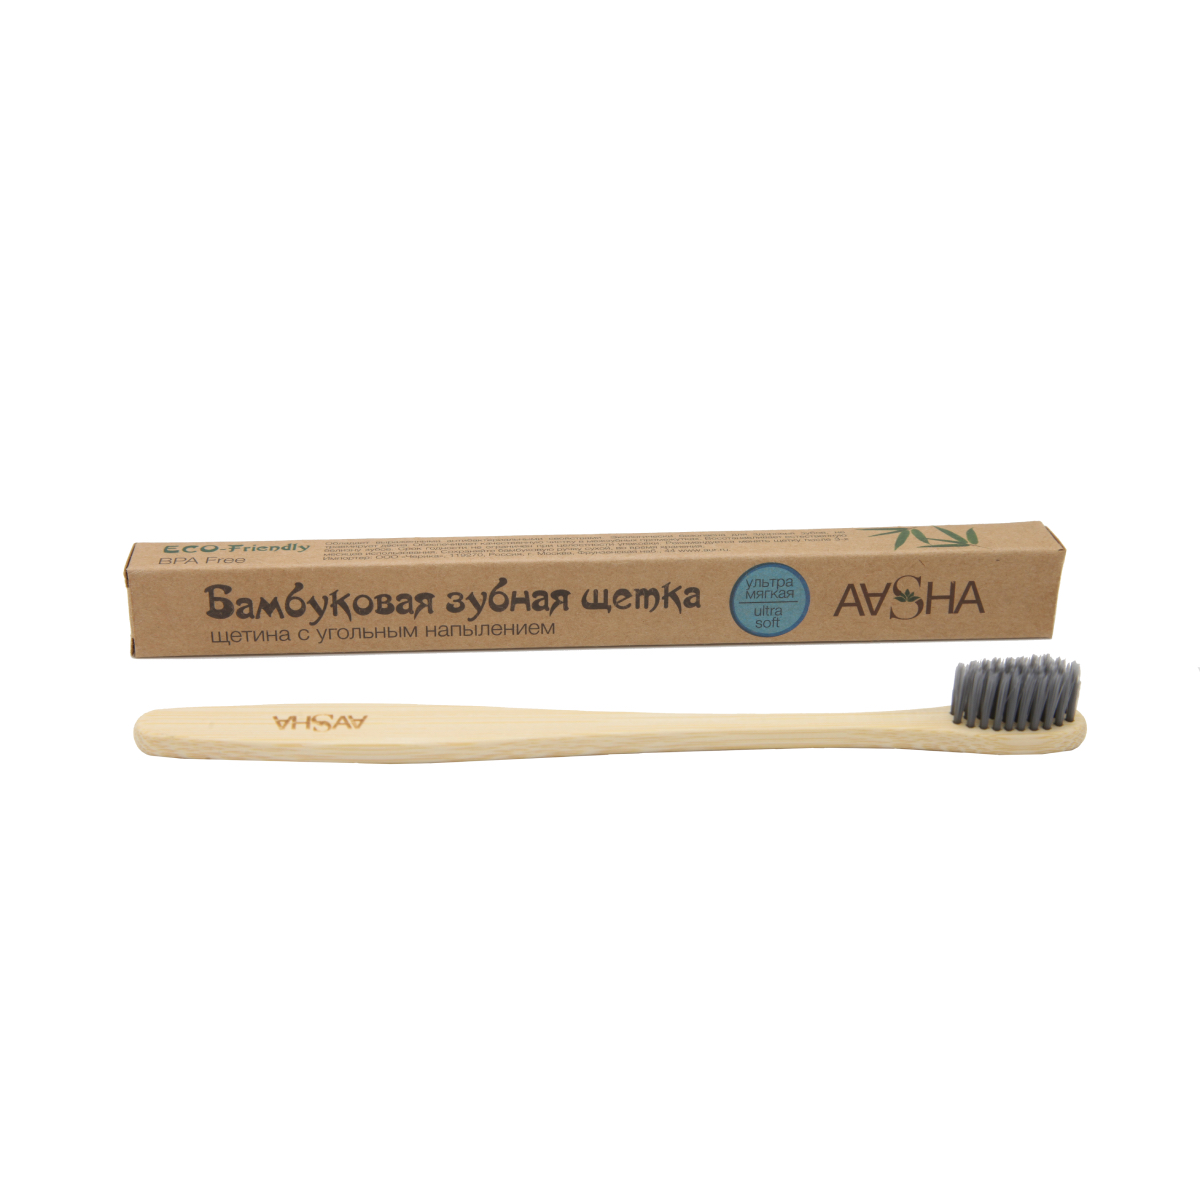 Бамбуковая зубная щетка Aasha с угольным напылением ULTRA SOFT (Ультра мягкая), 1 шт. бамбуковая зубная щетка с подставкой